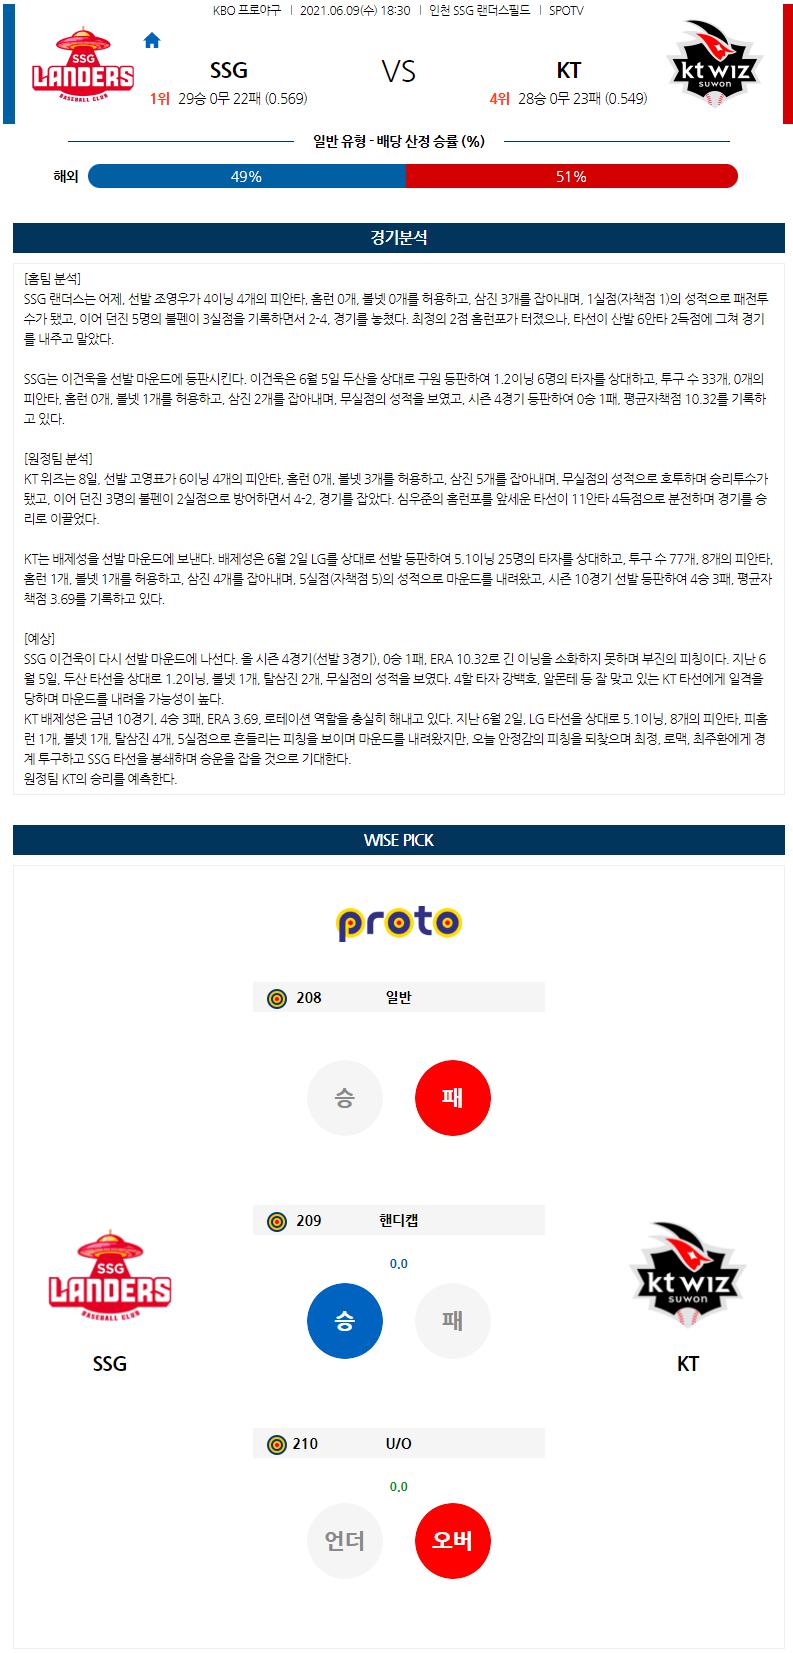 【KBO】 6월 9일 SSG vs kt 한국야구분석 한국야구중계 무료야구중계.png